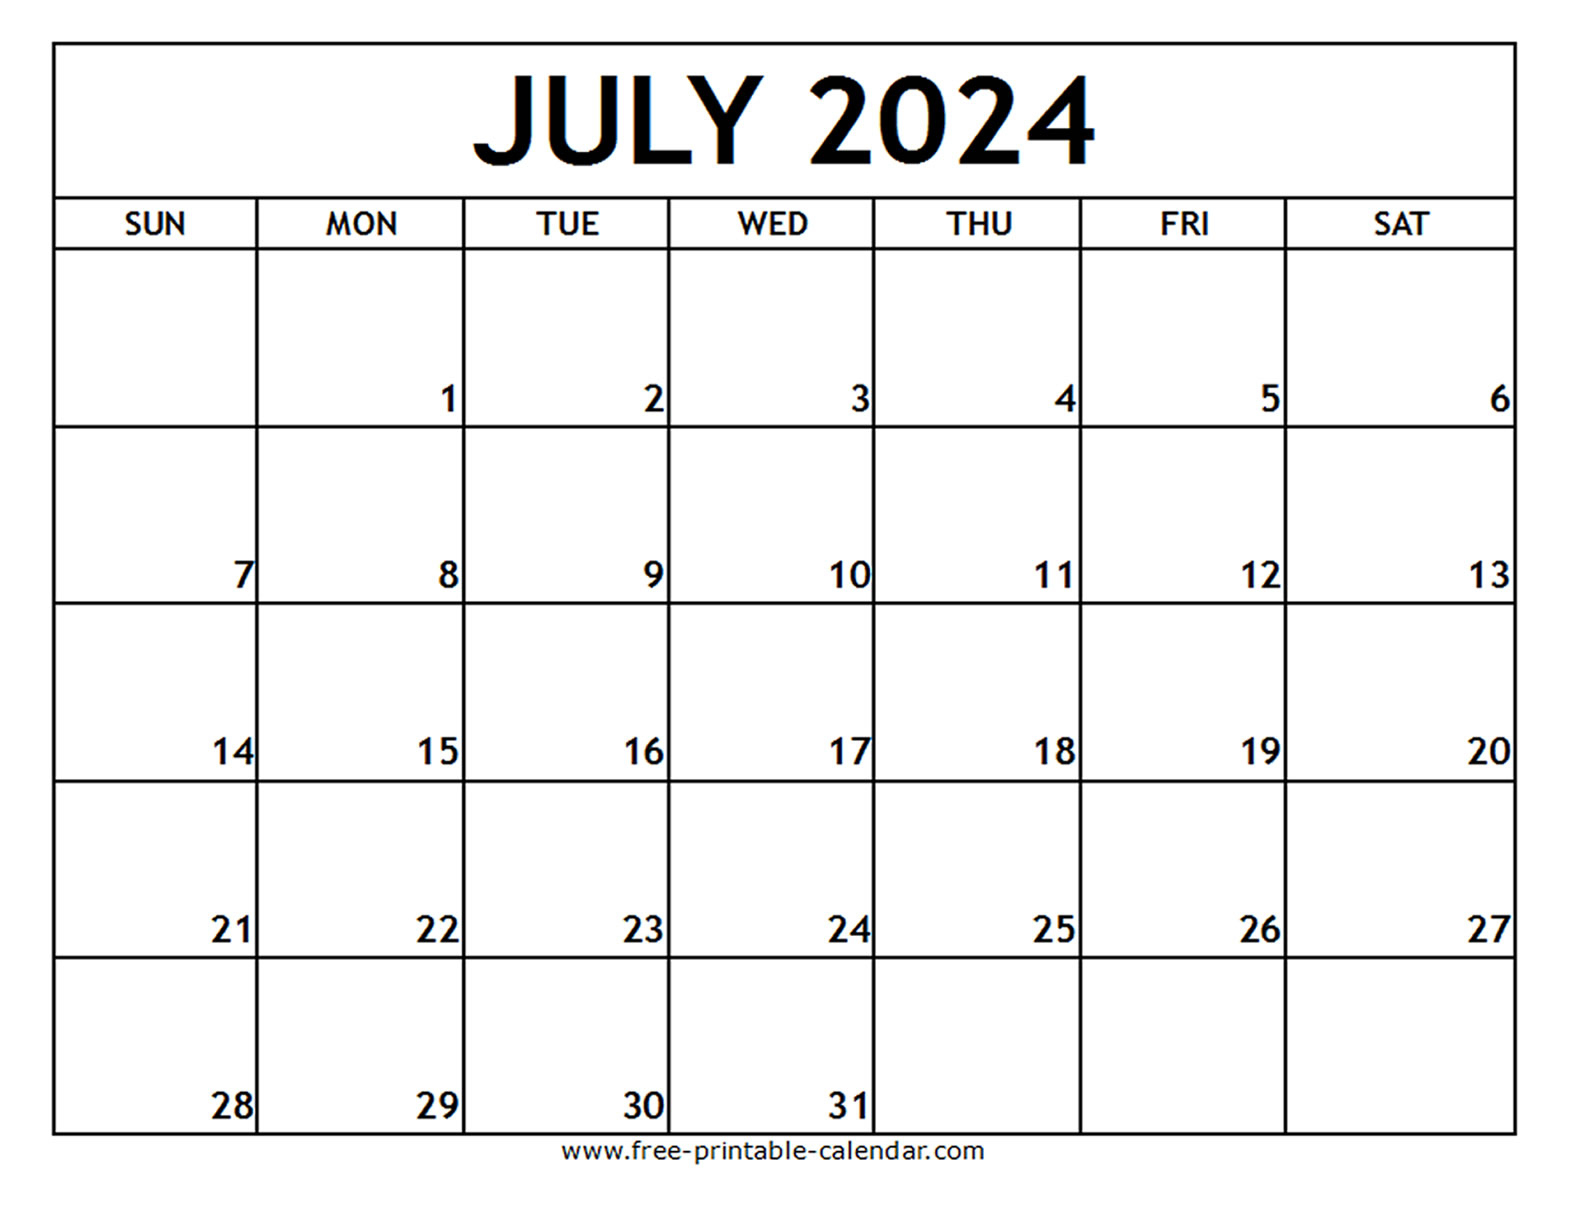 July 2024 Printable Calendar - Free-Printable-Calendar | 15 July 2024 Calendar Printable